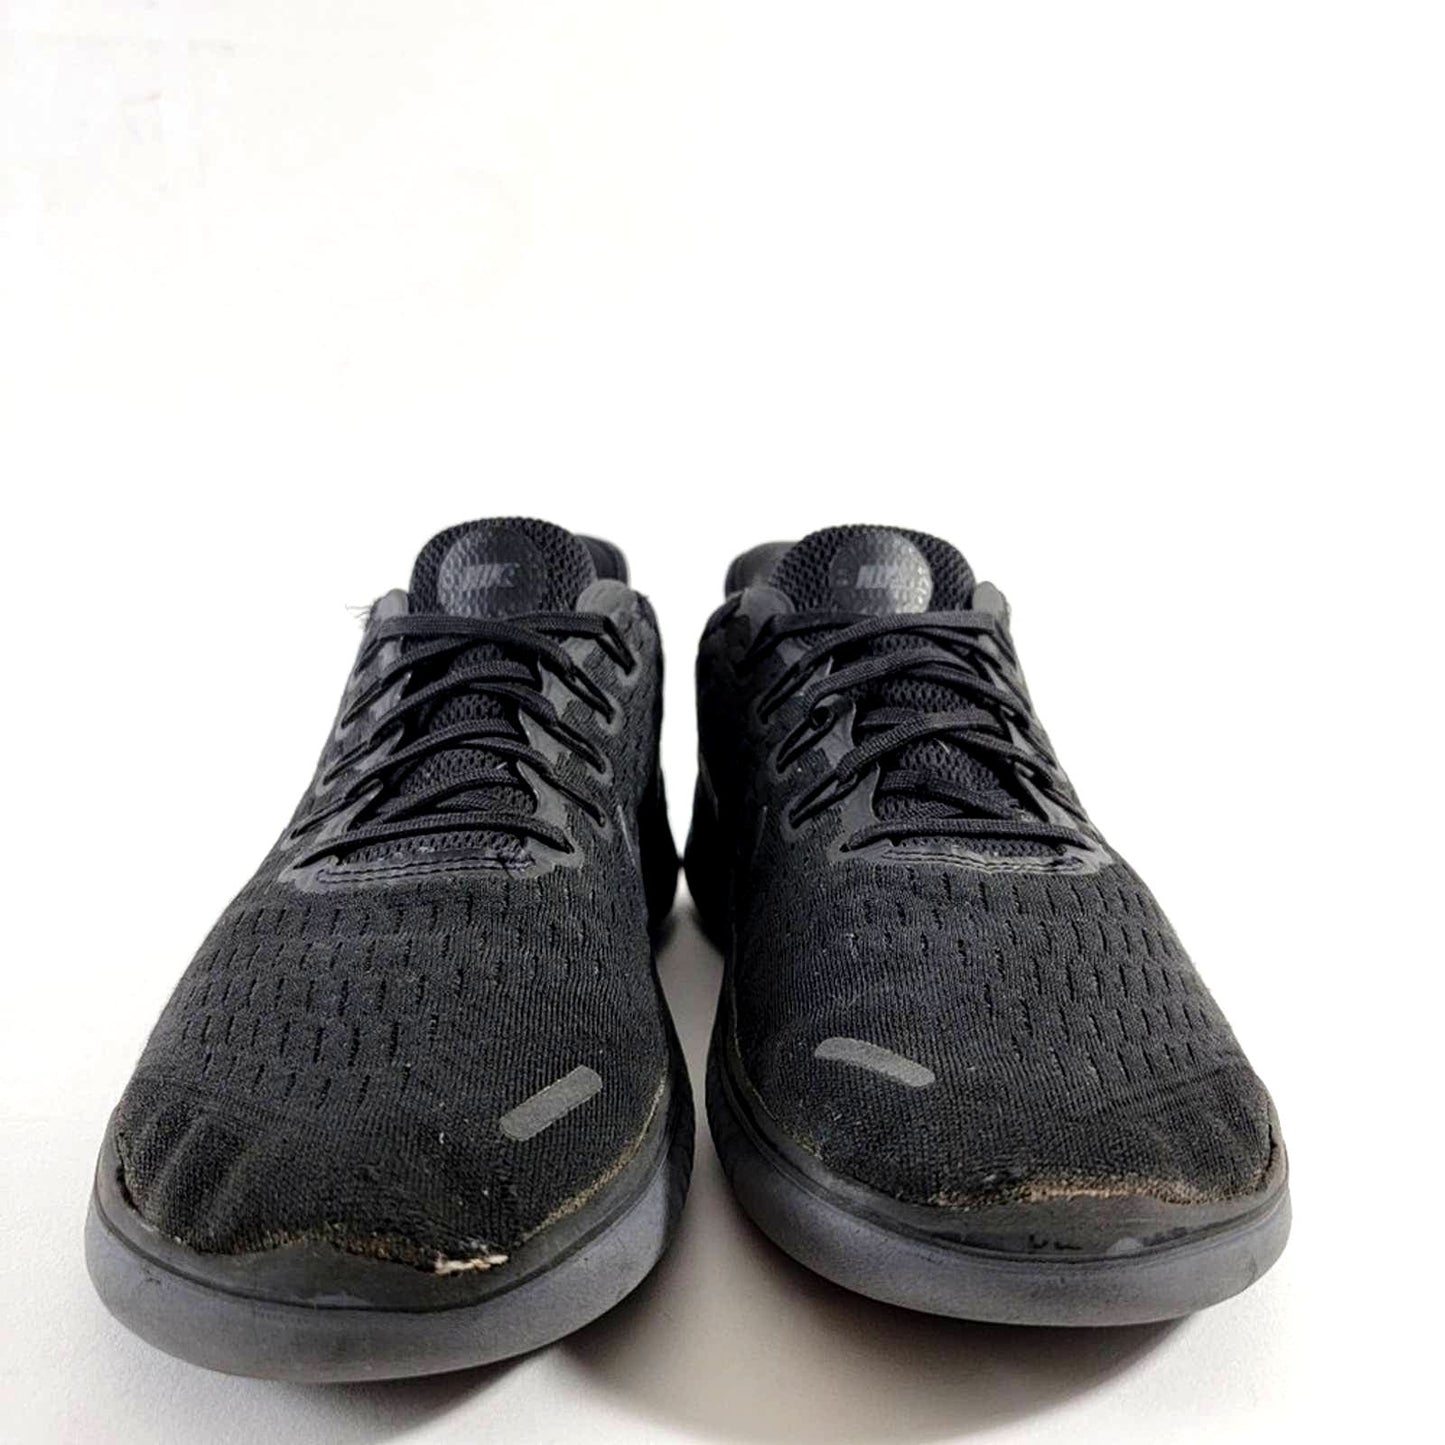 Nike Free Rn 2018 Black Running Shoes - 10